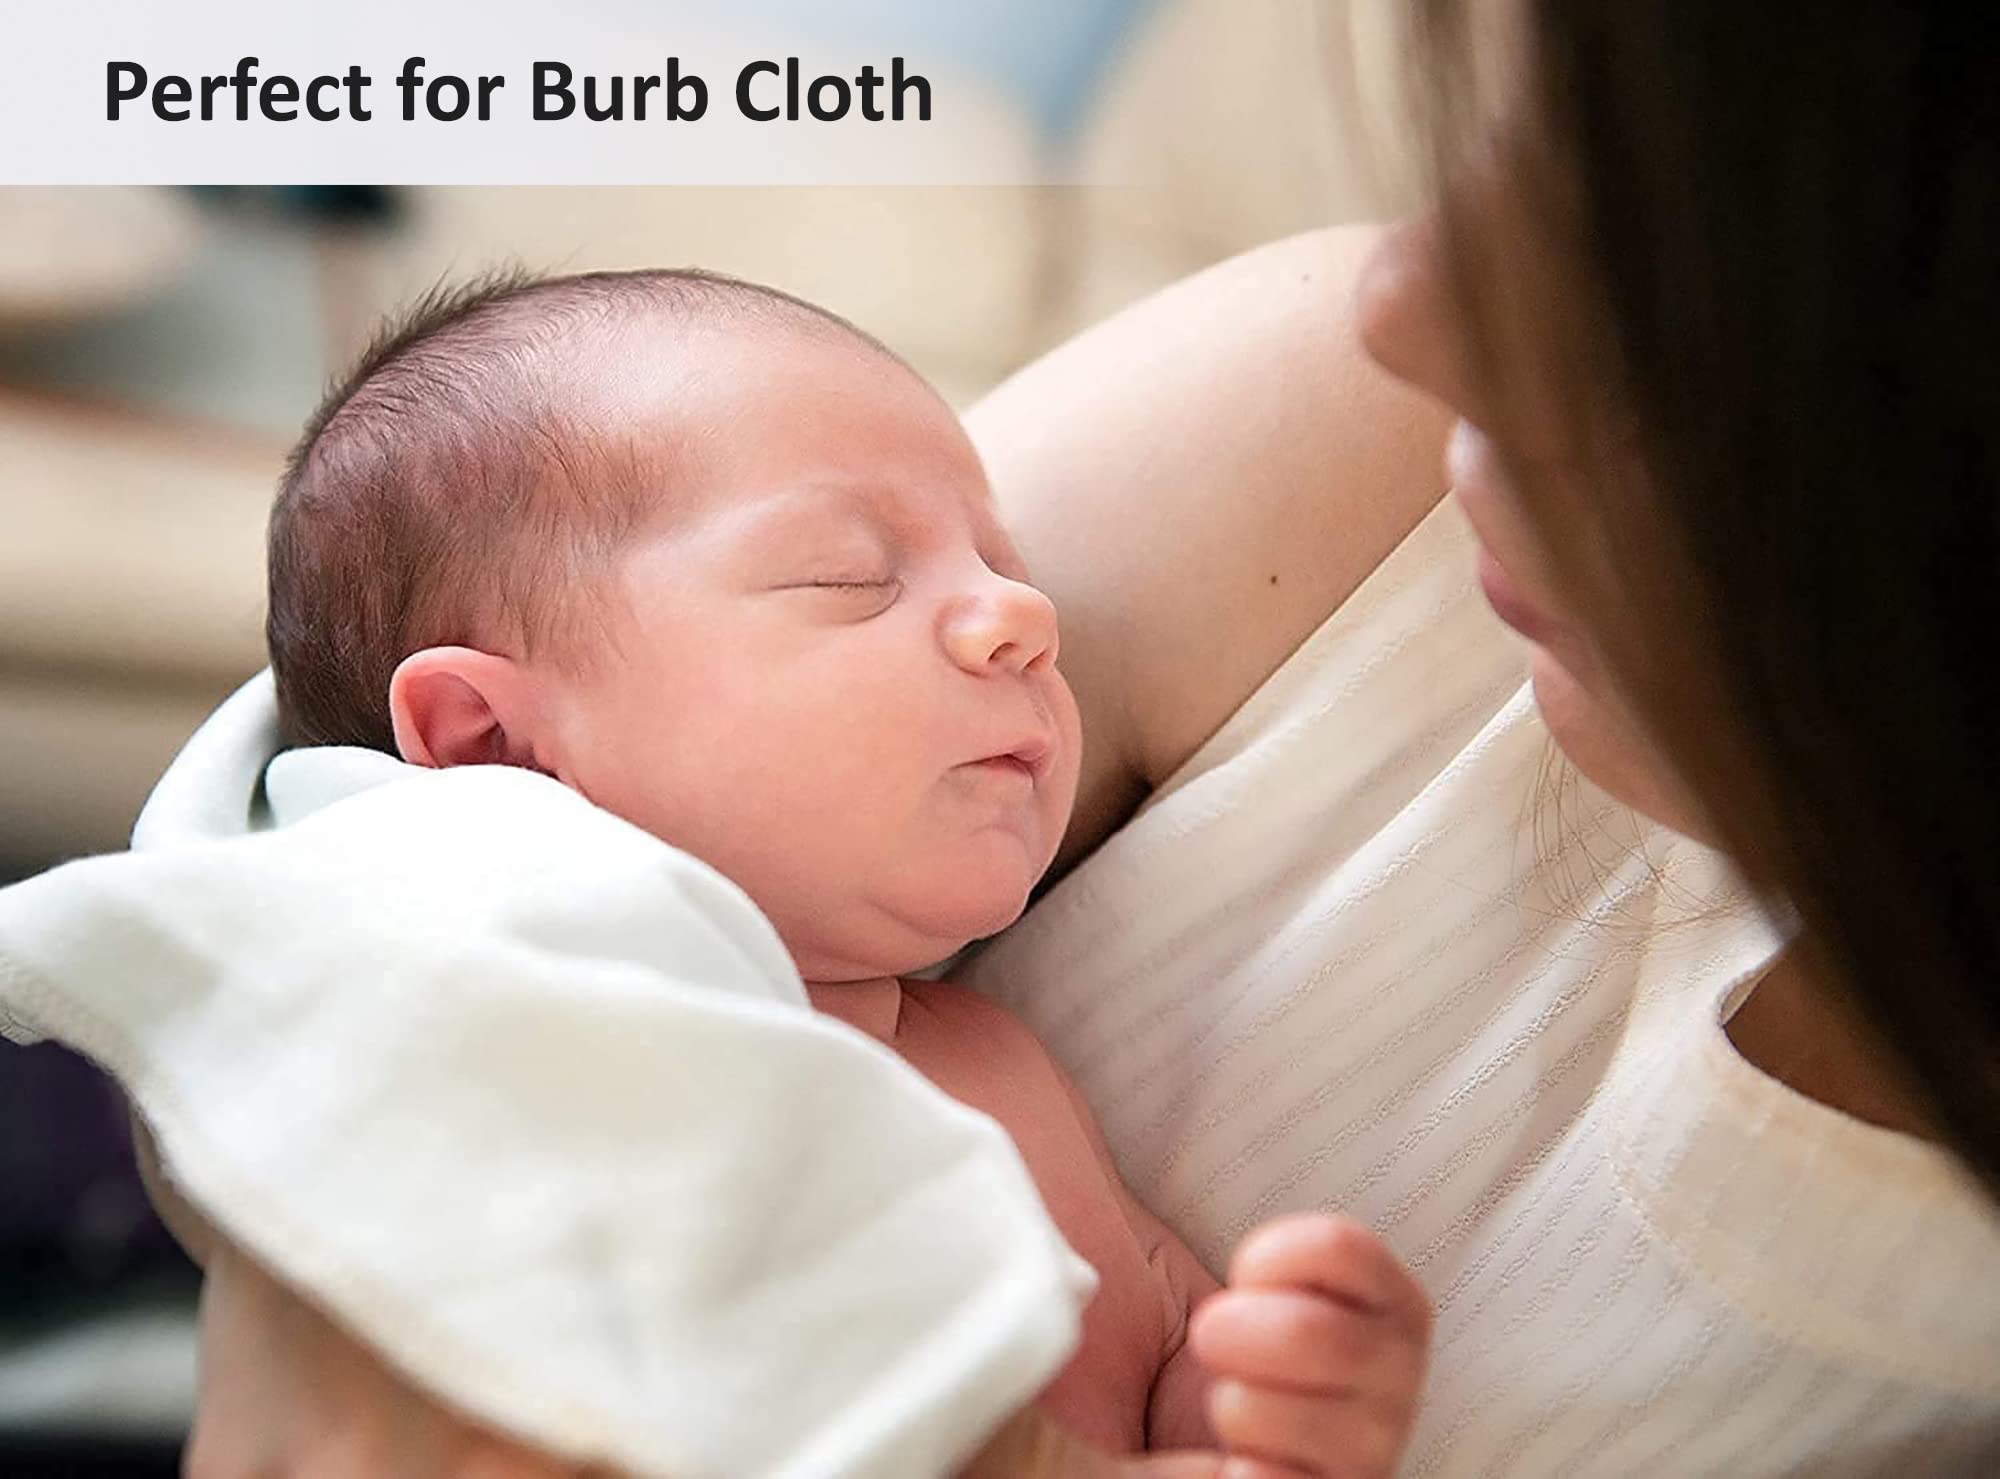 Ruvanti 10 Pack, Birdseye 3-Ply Prefold Cloth Diapers for Babies, 13x19 Inch, White